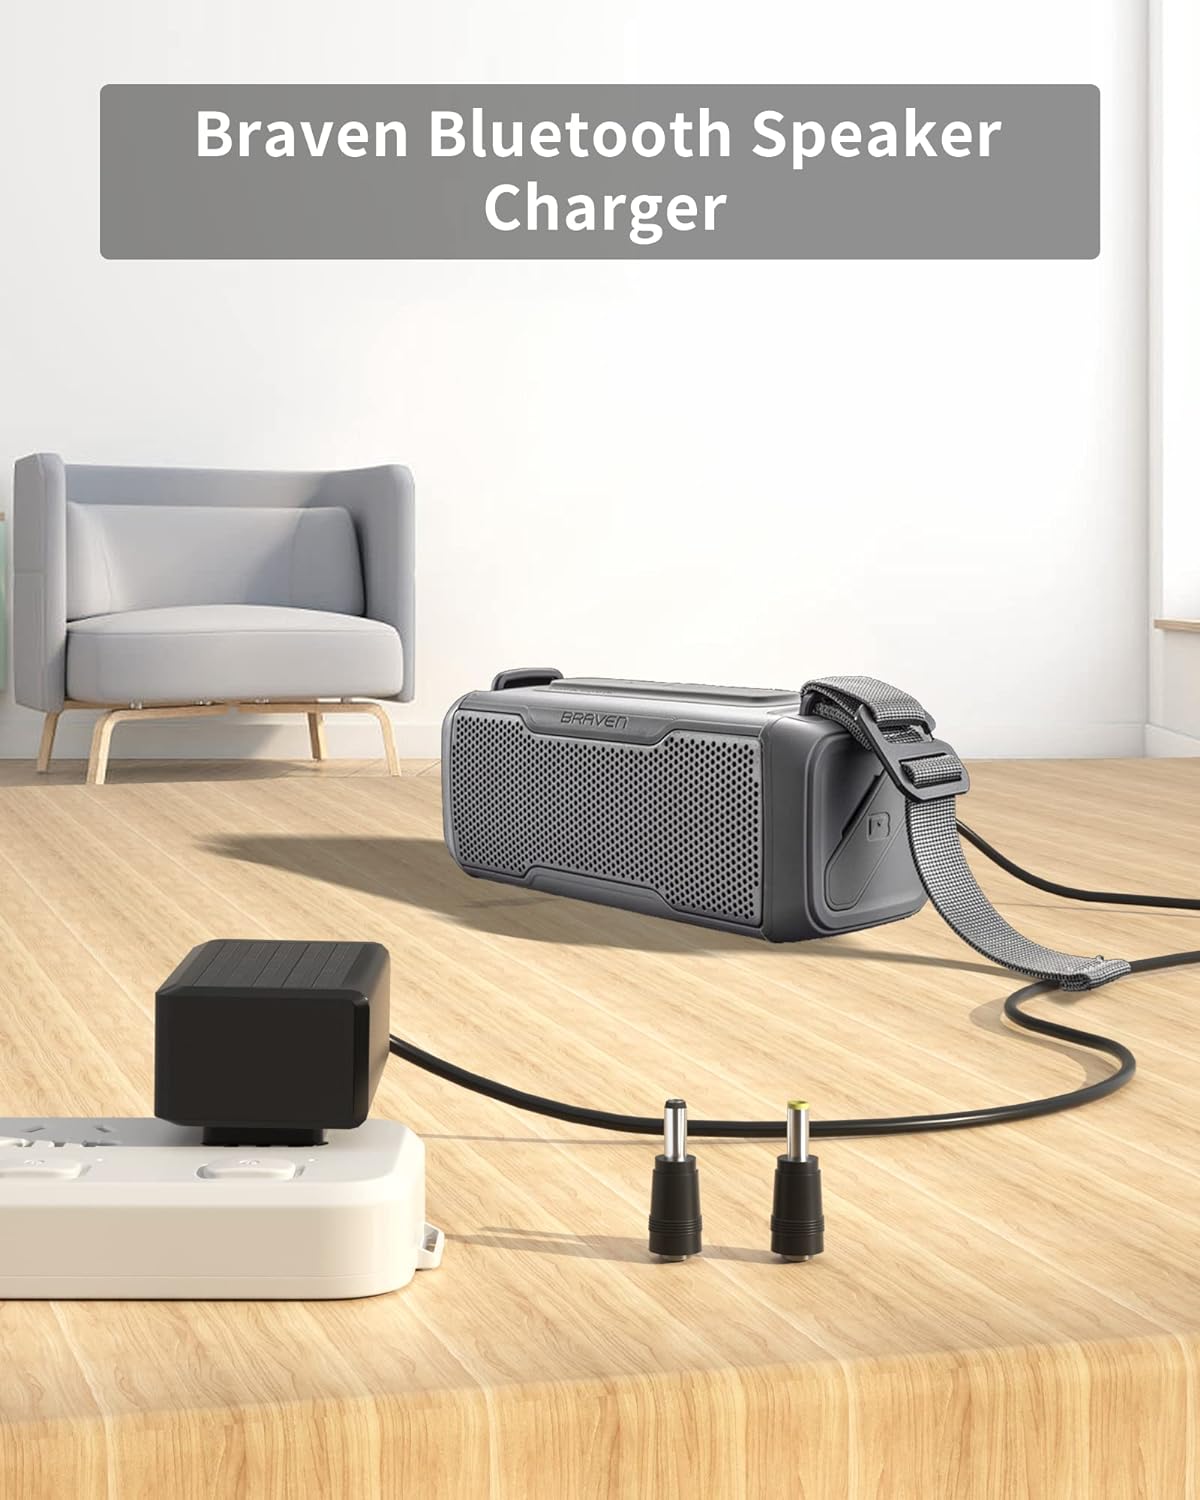 12V Charger Replacement for Braven Bluetooth Speaker Charger Compatible with Braven BRV-X, BRVX, BRVXGWB, BRVXBBB, BRV-H